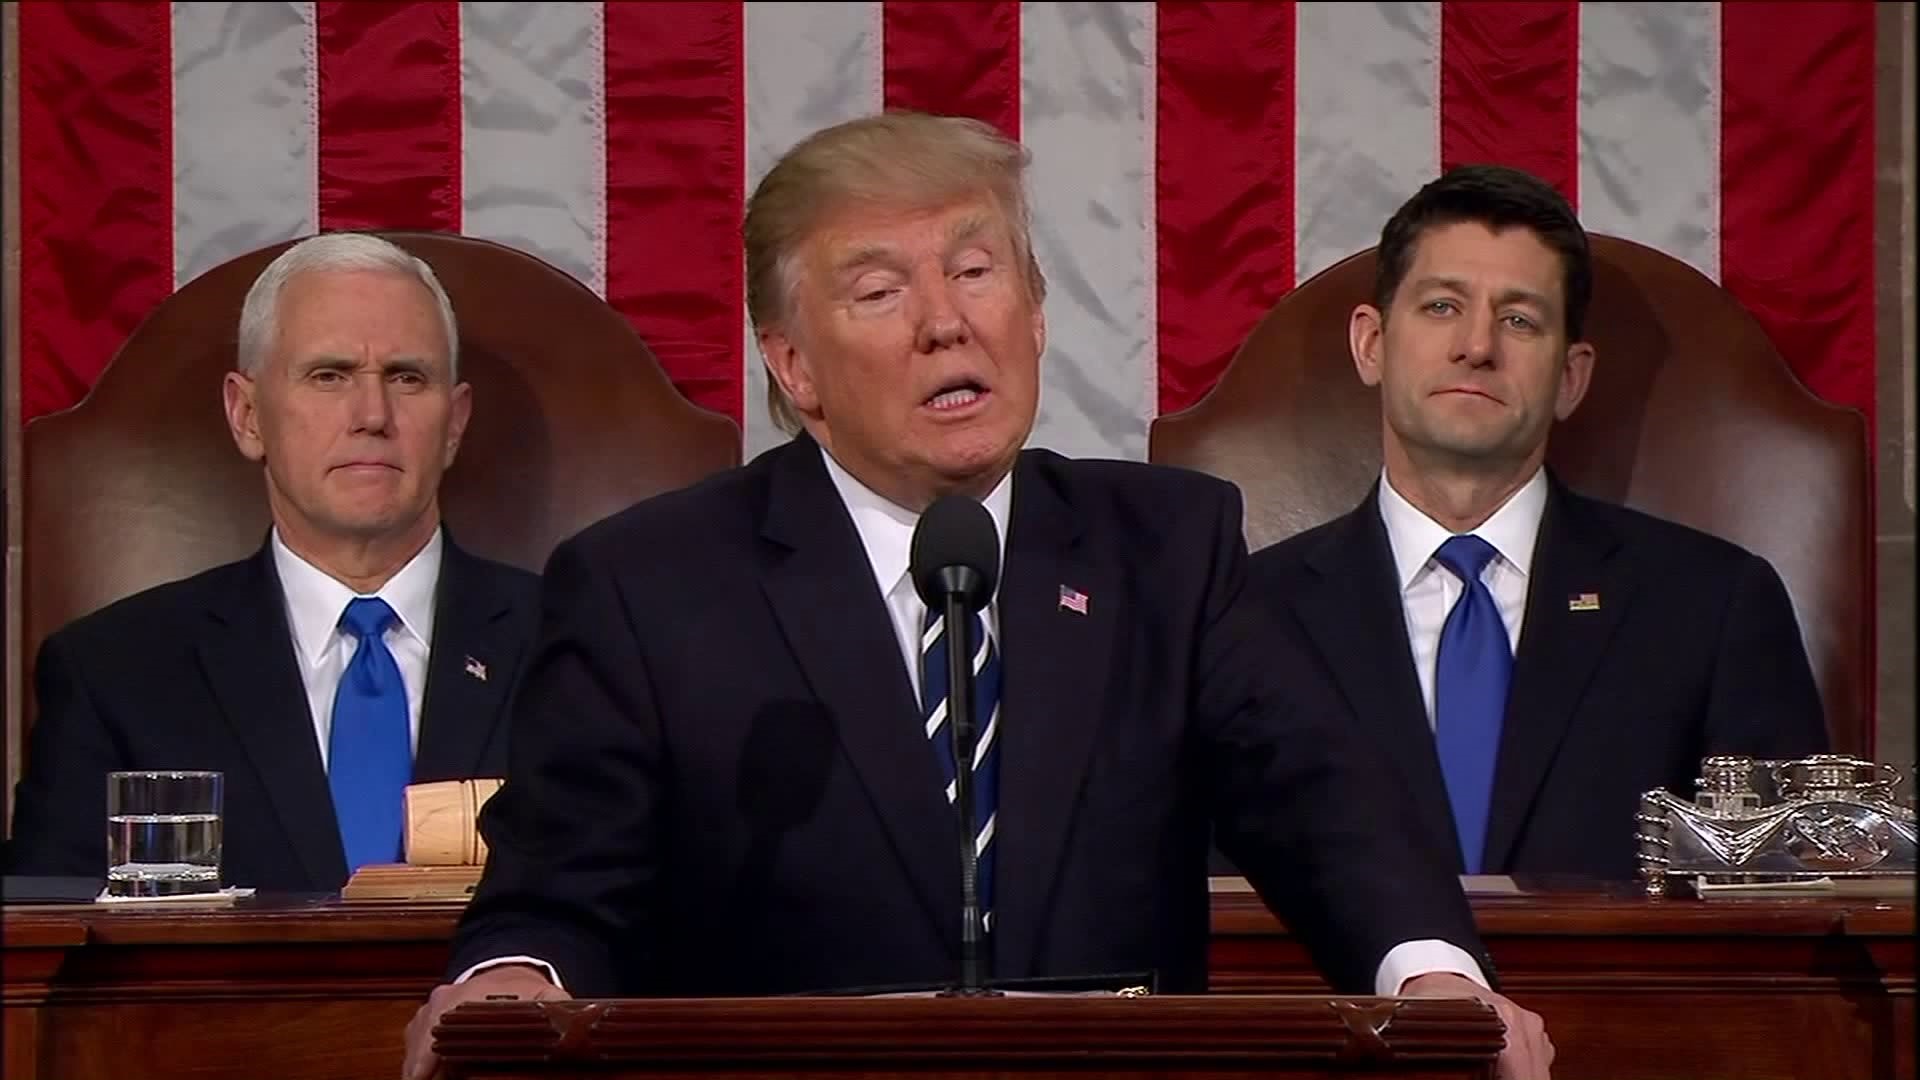 President Trump's address to congress